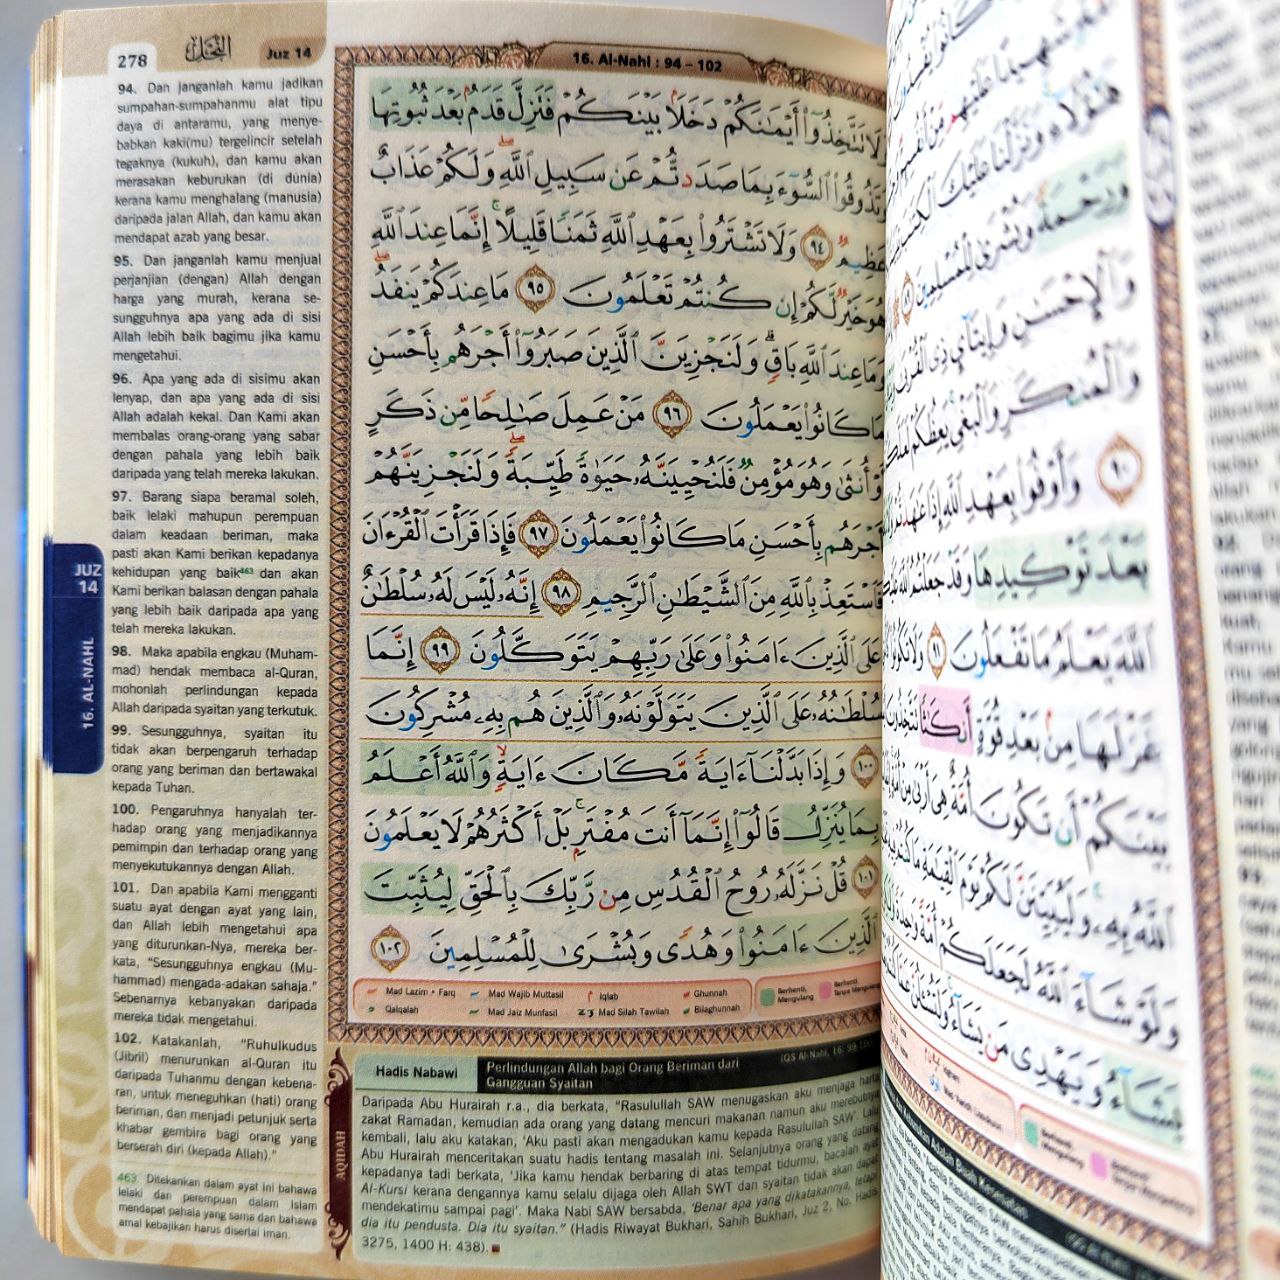 Al Quran Multazam Medina A6